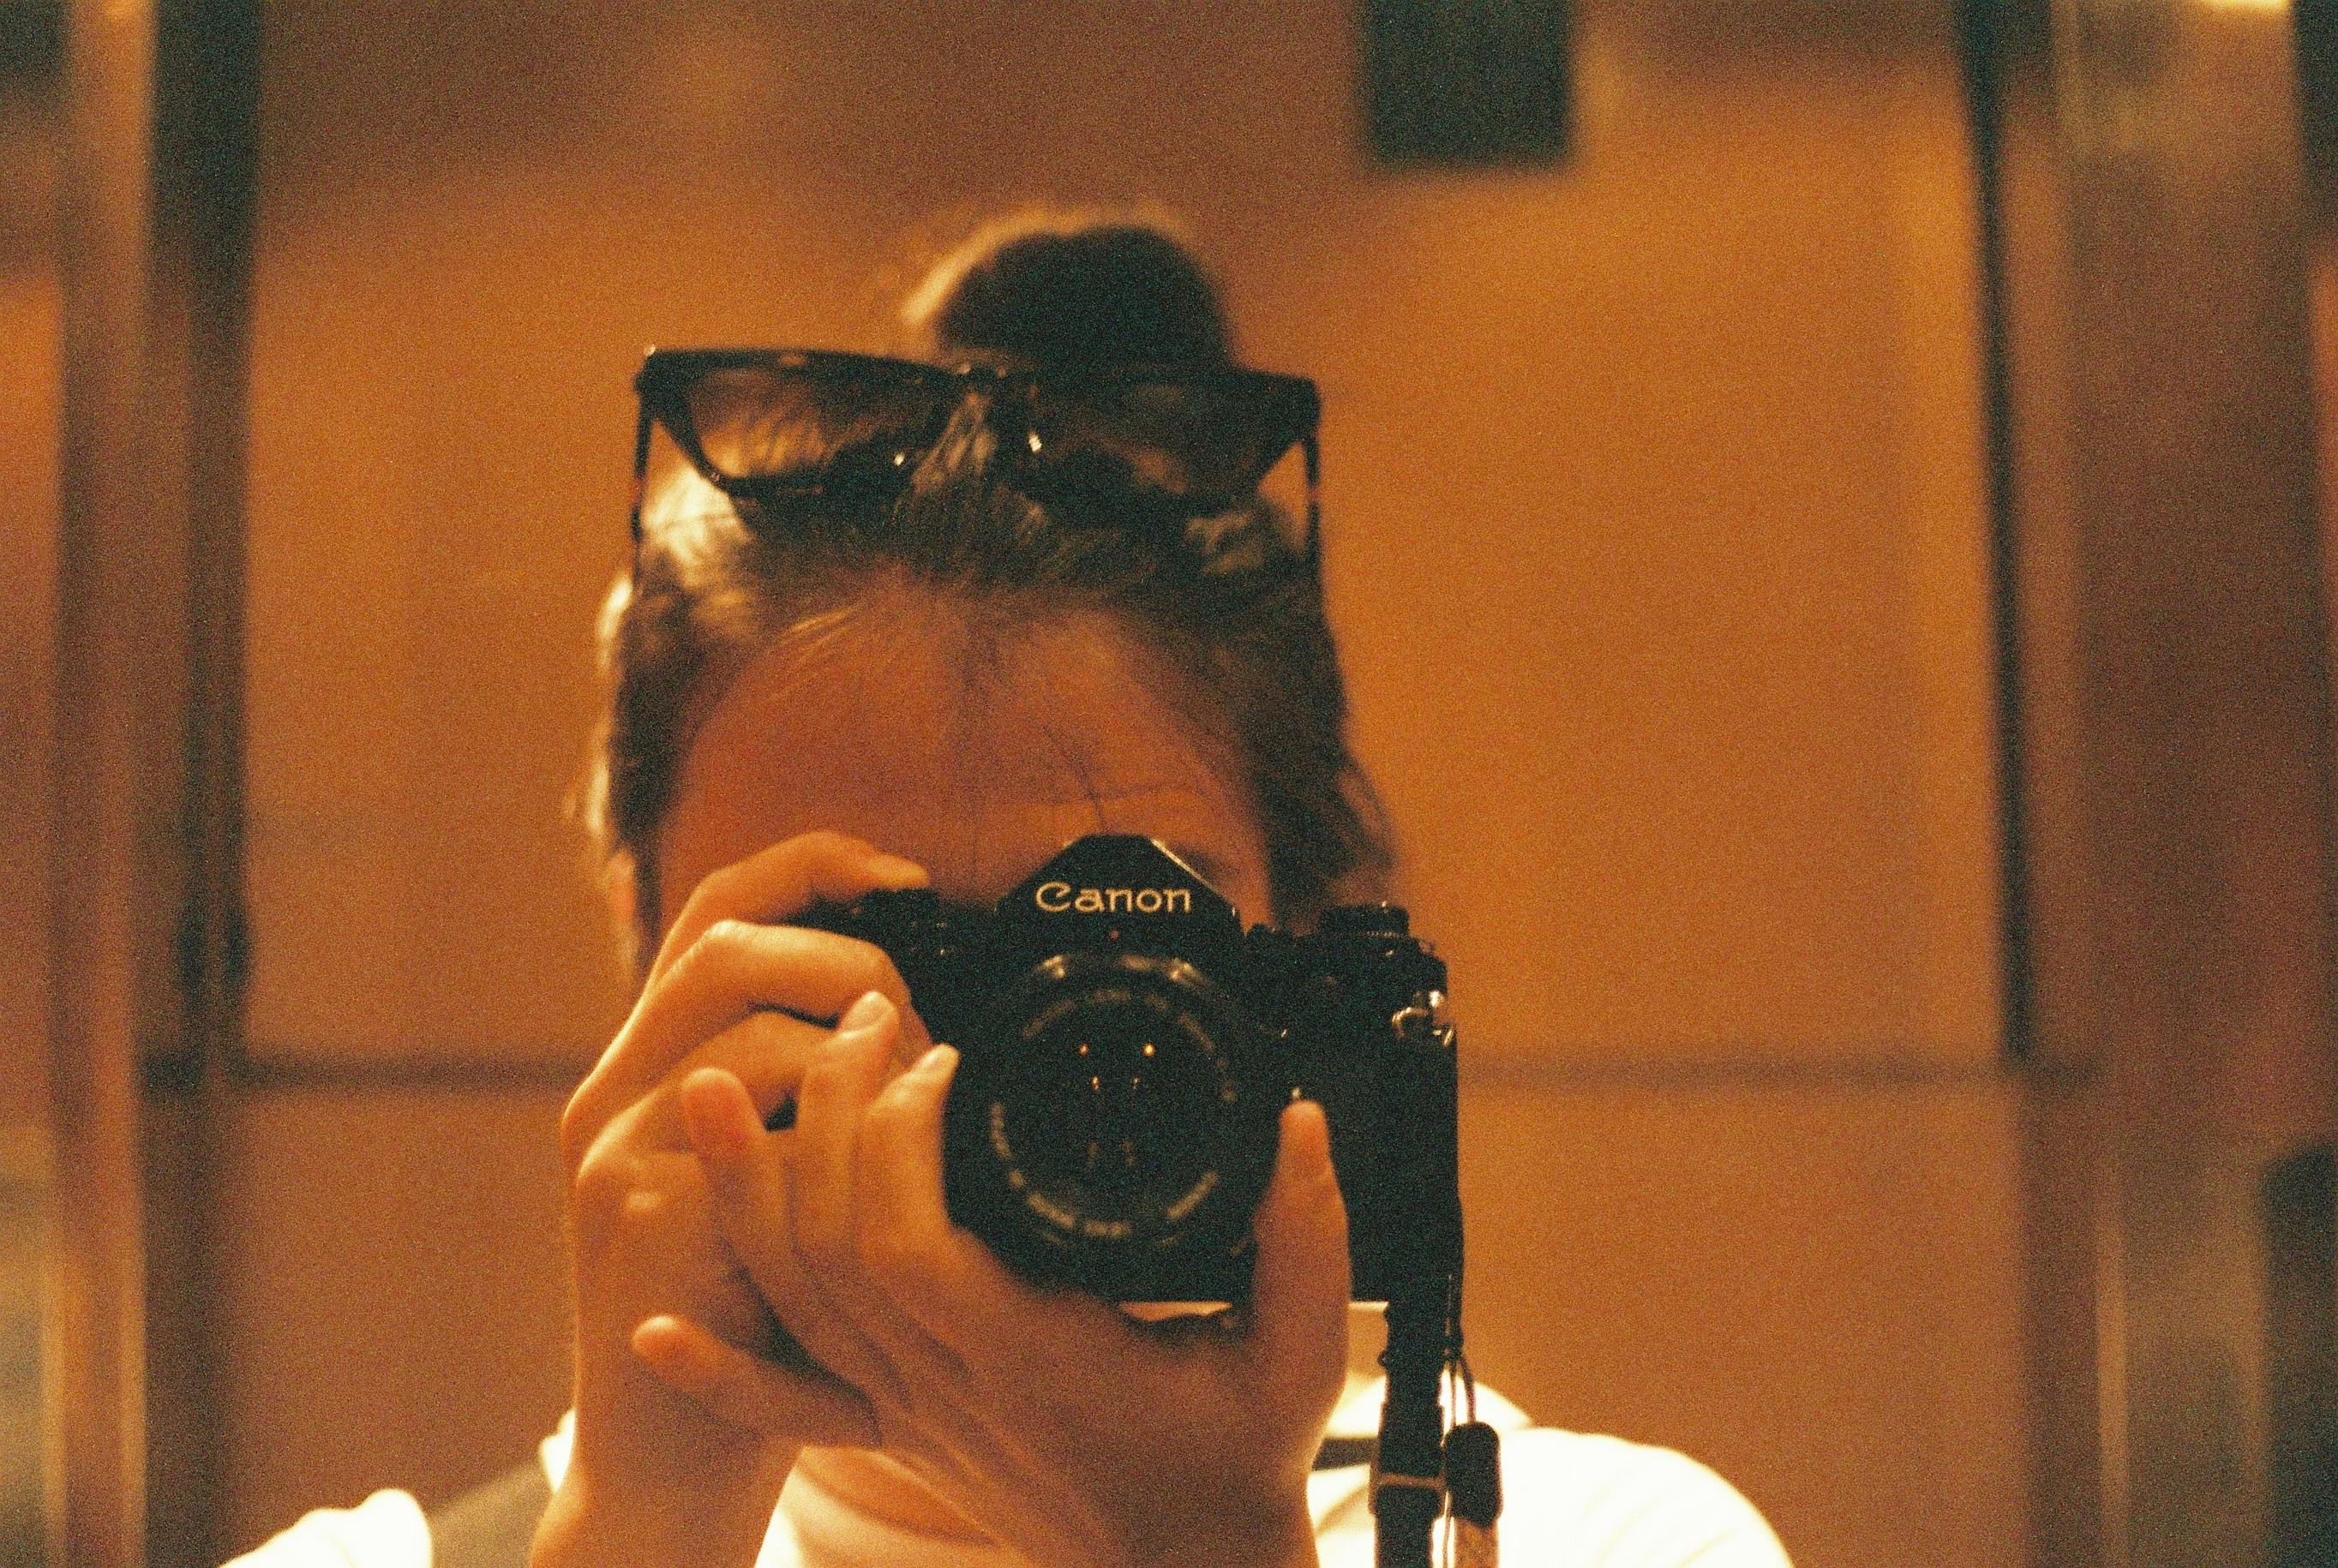 A woman taking photgraphs | Source: Pexels